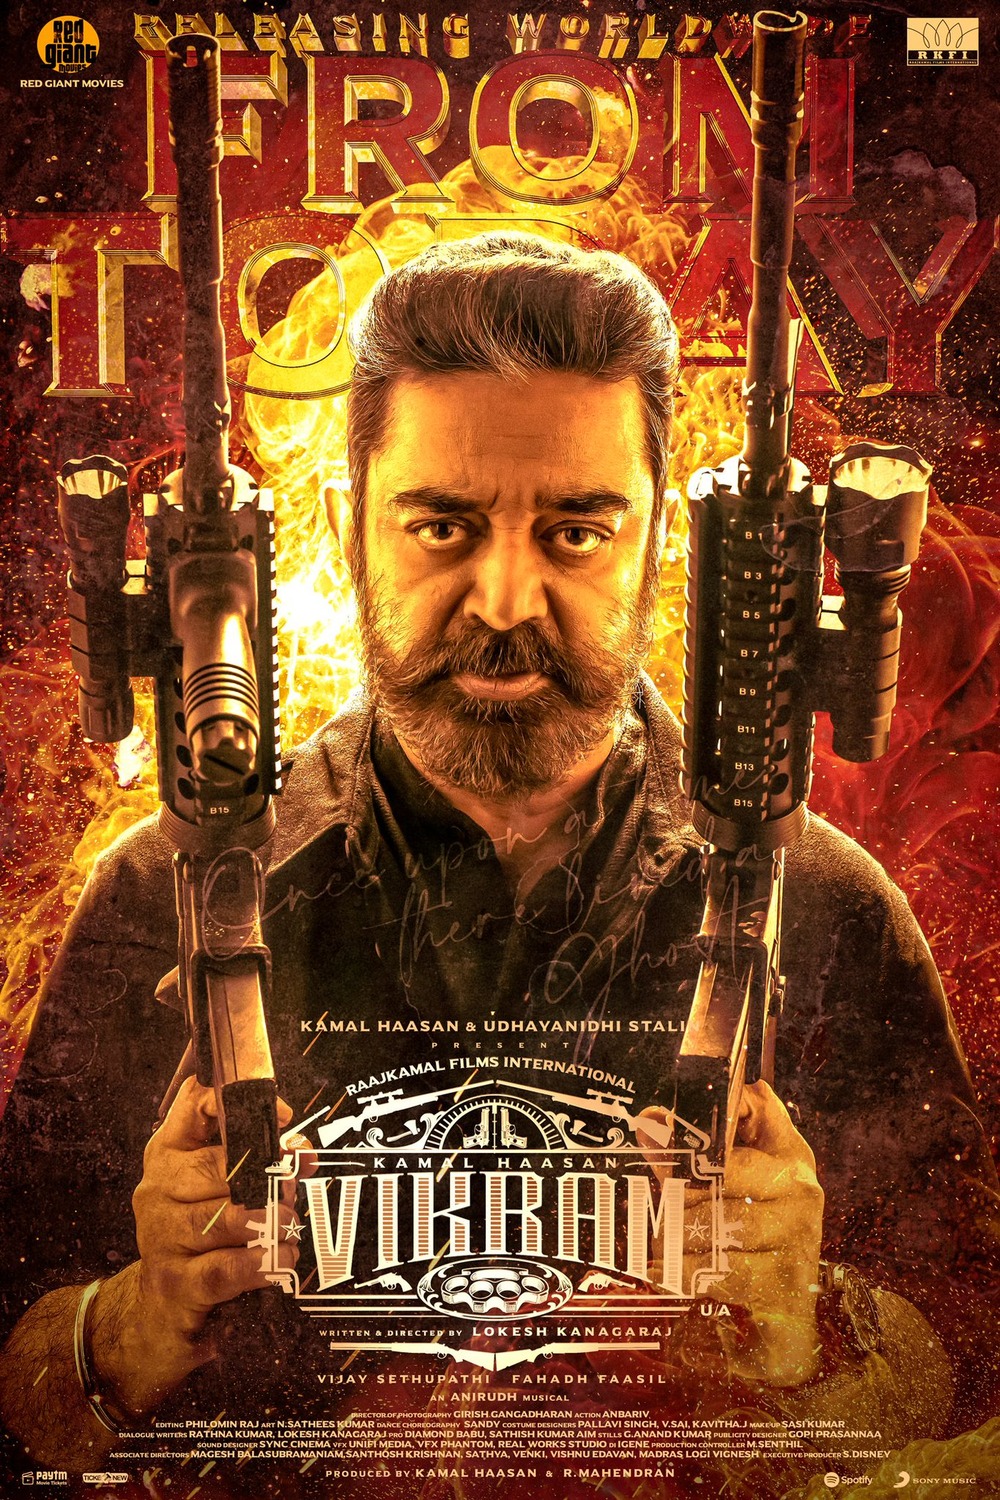 Extra Large Movie Poster Image for Vikram 